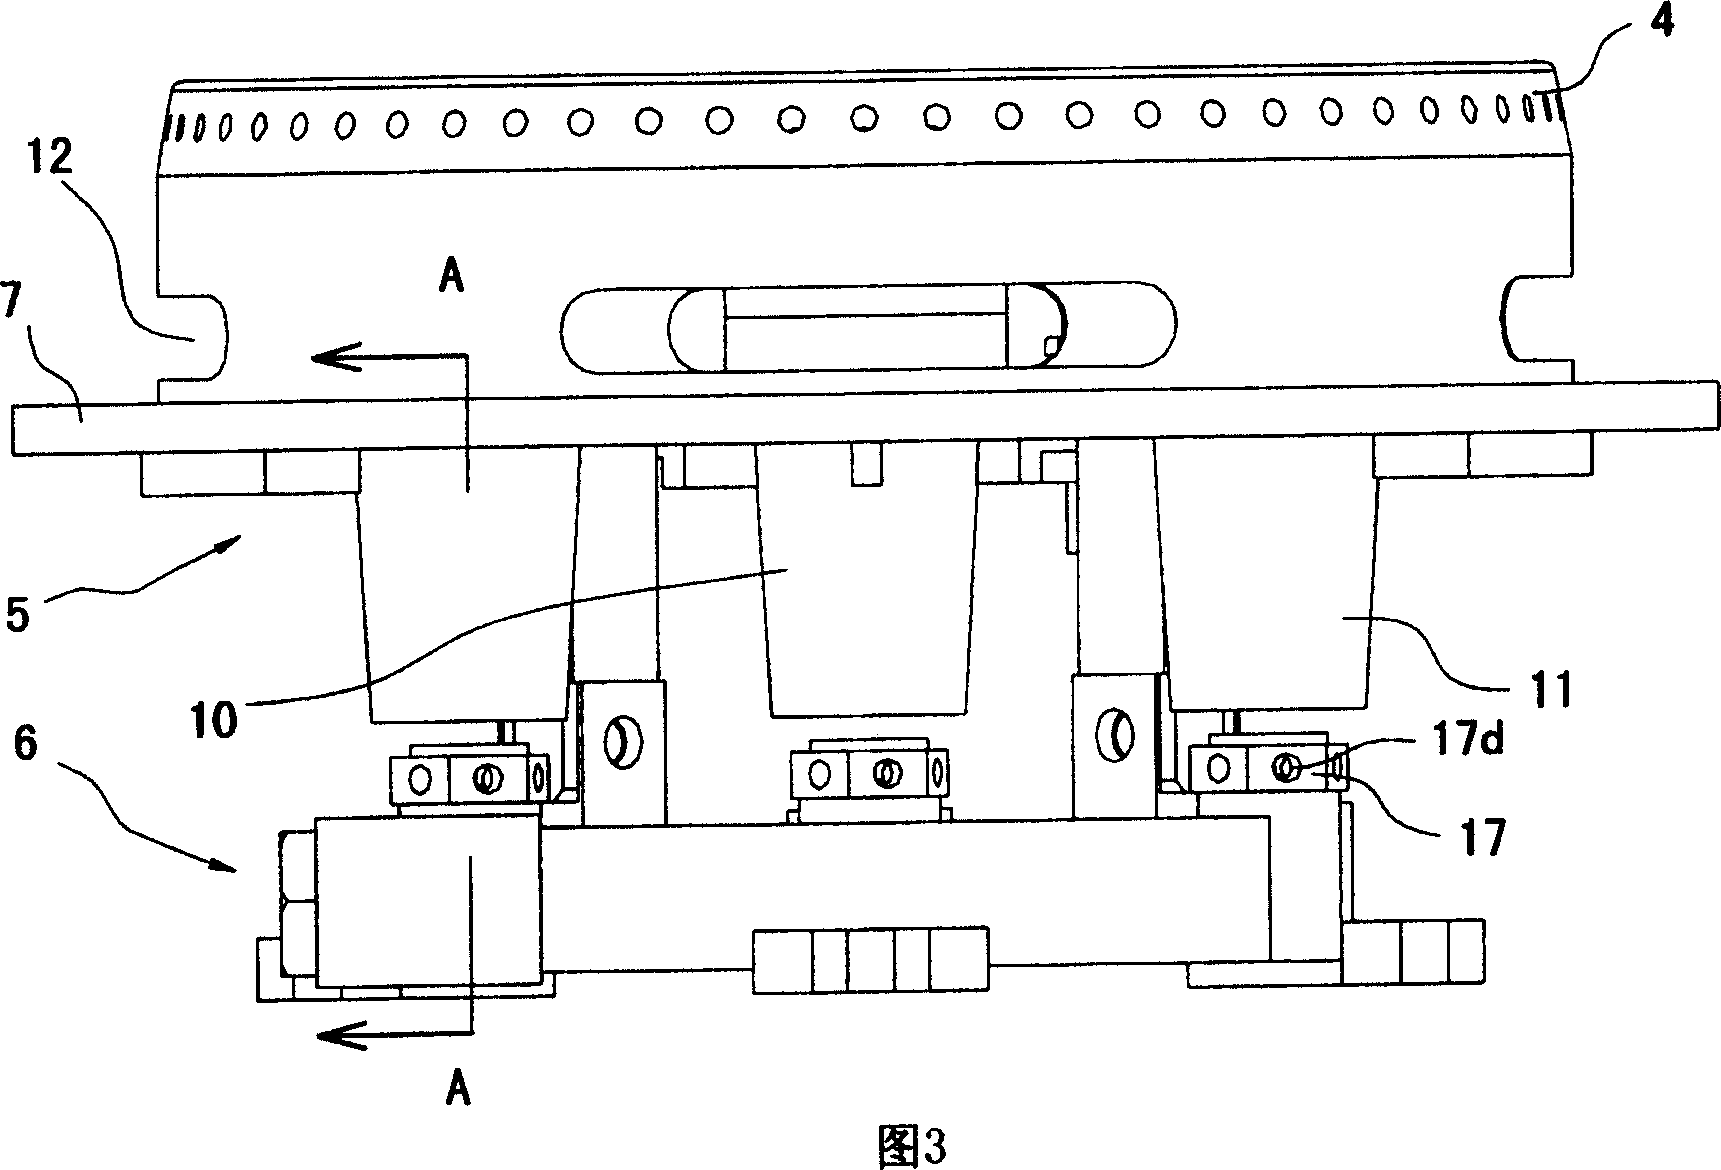 Multi-cavity integrated combustor